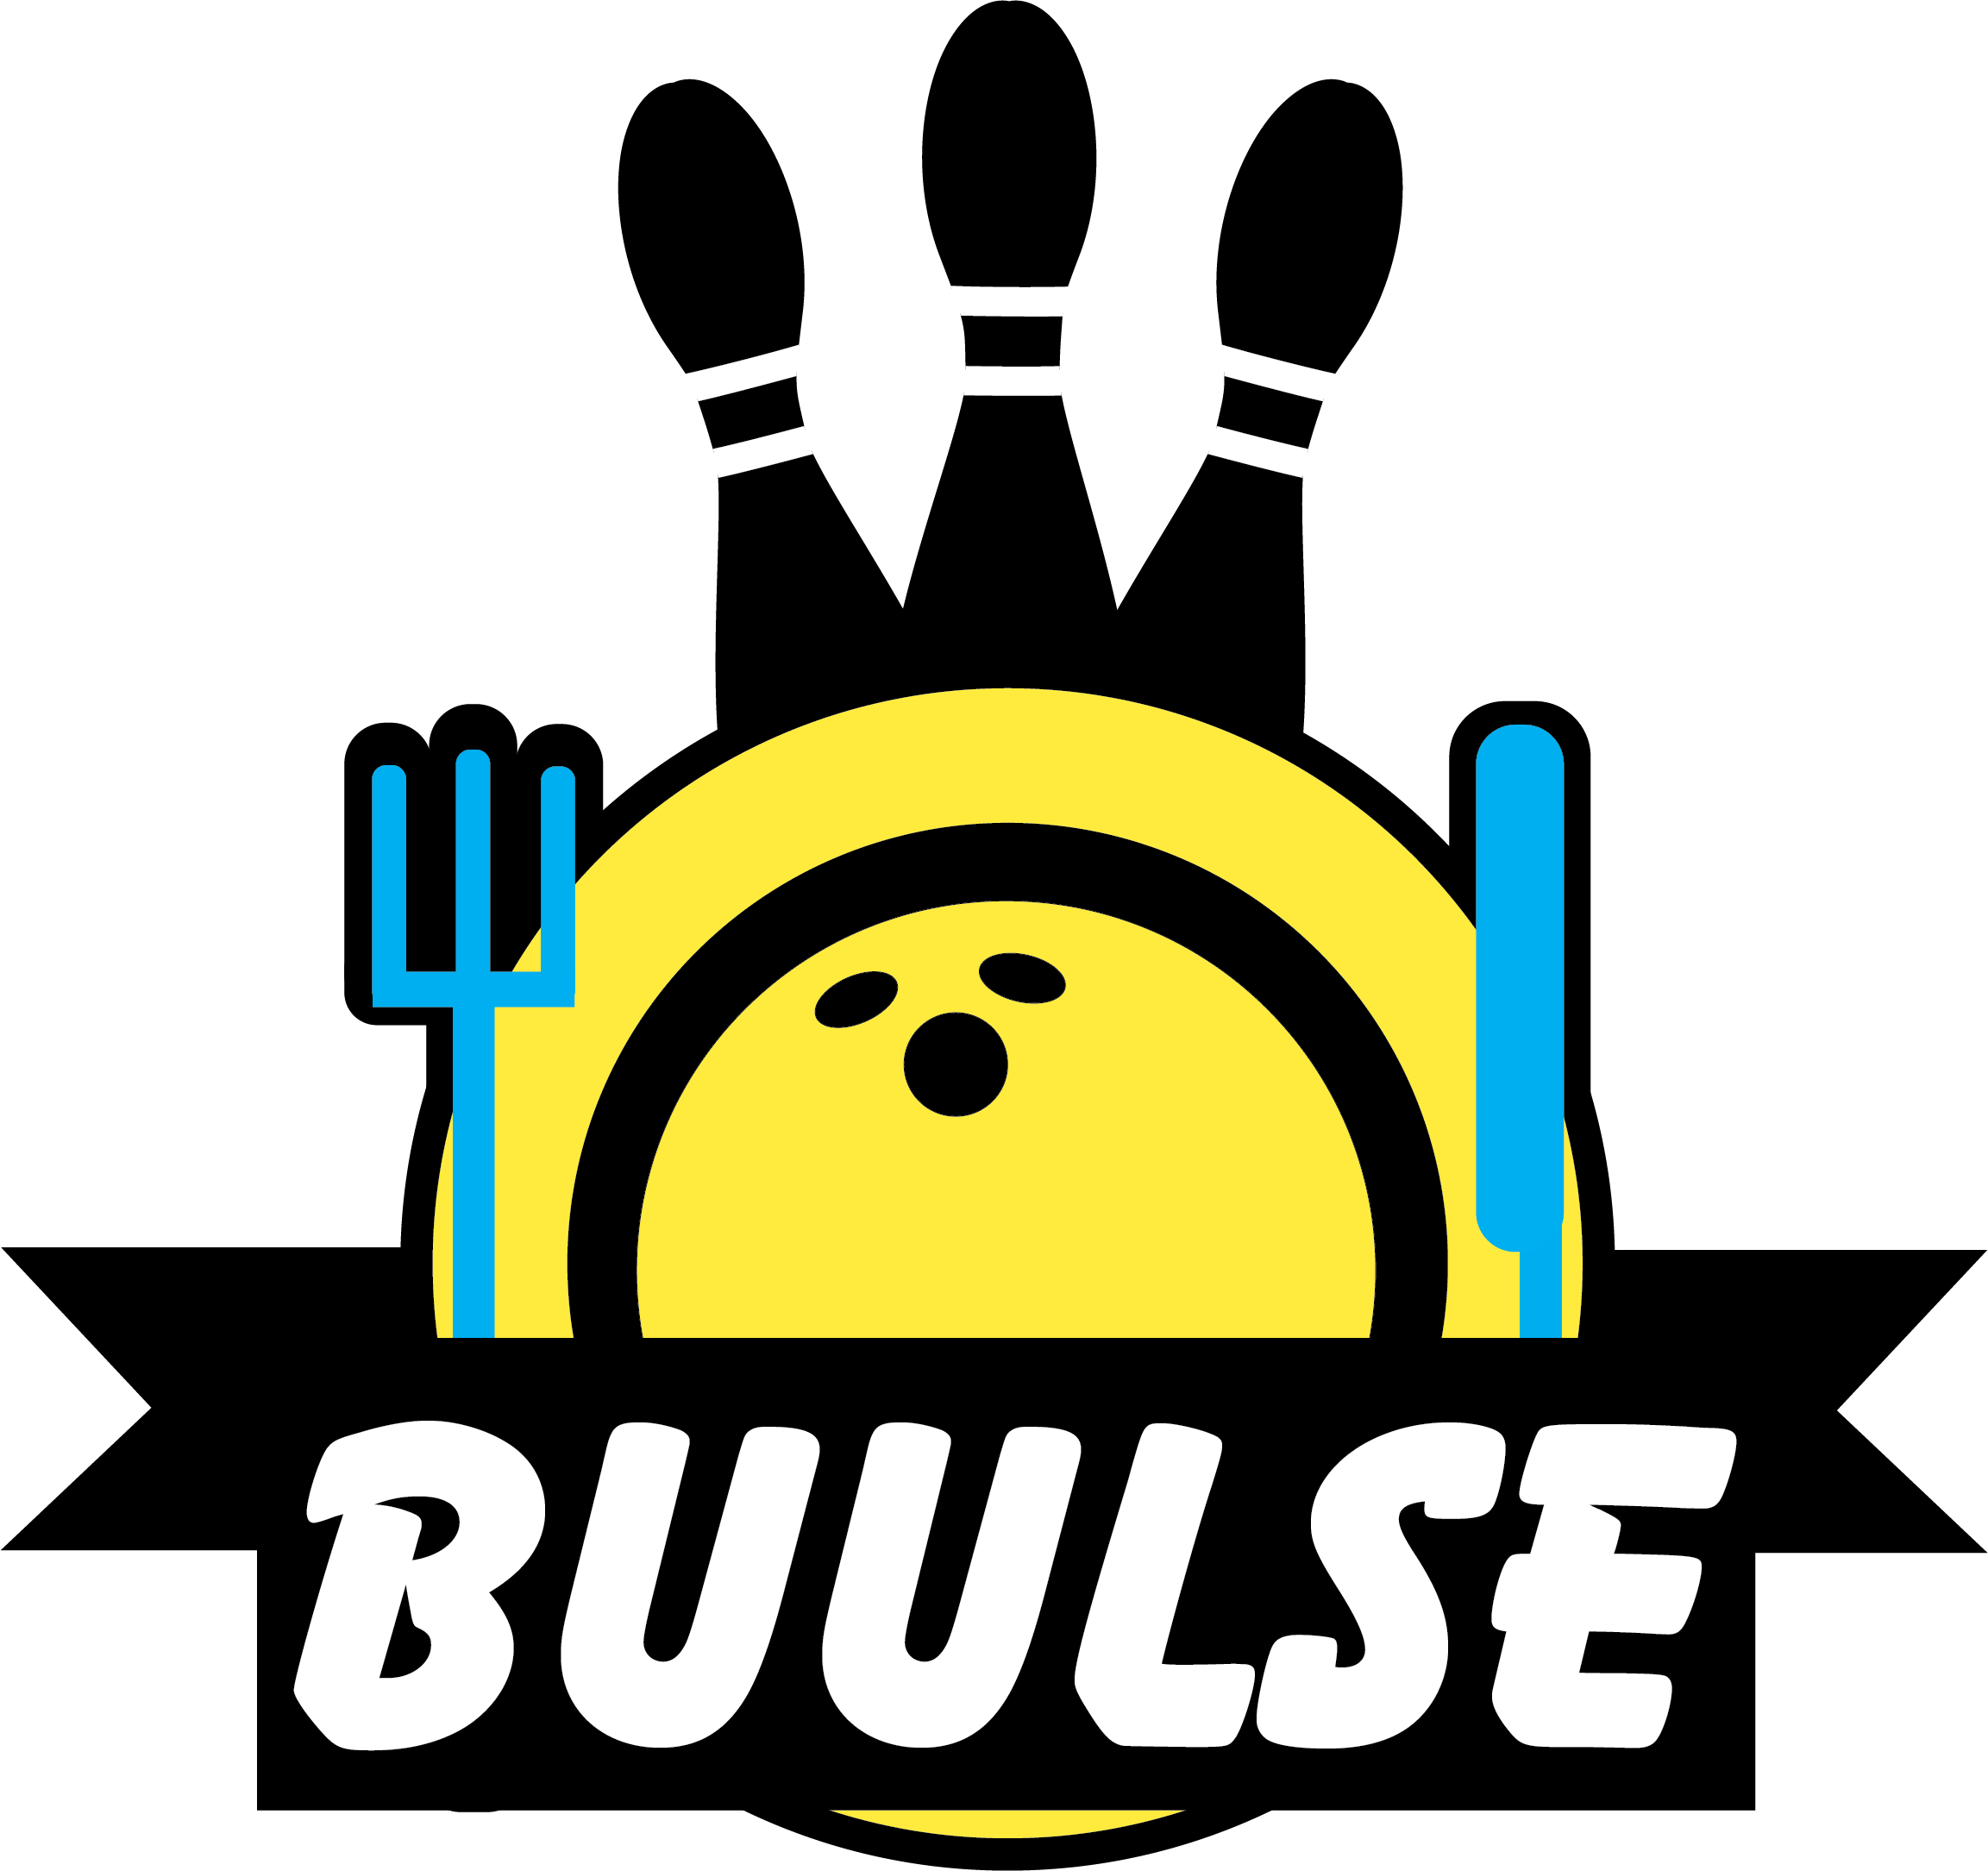 Buulse bowling - Atomos